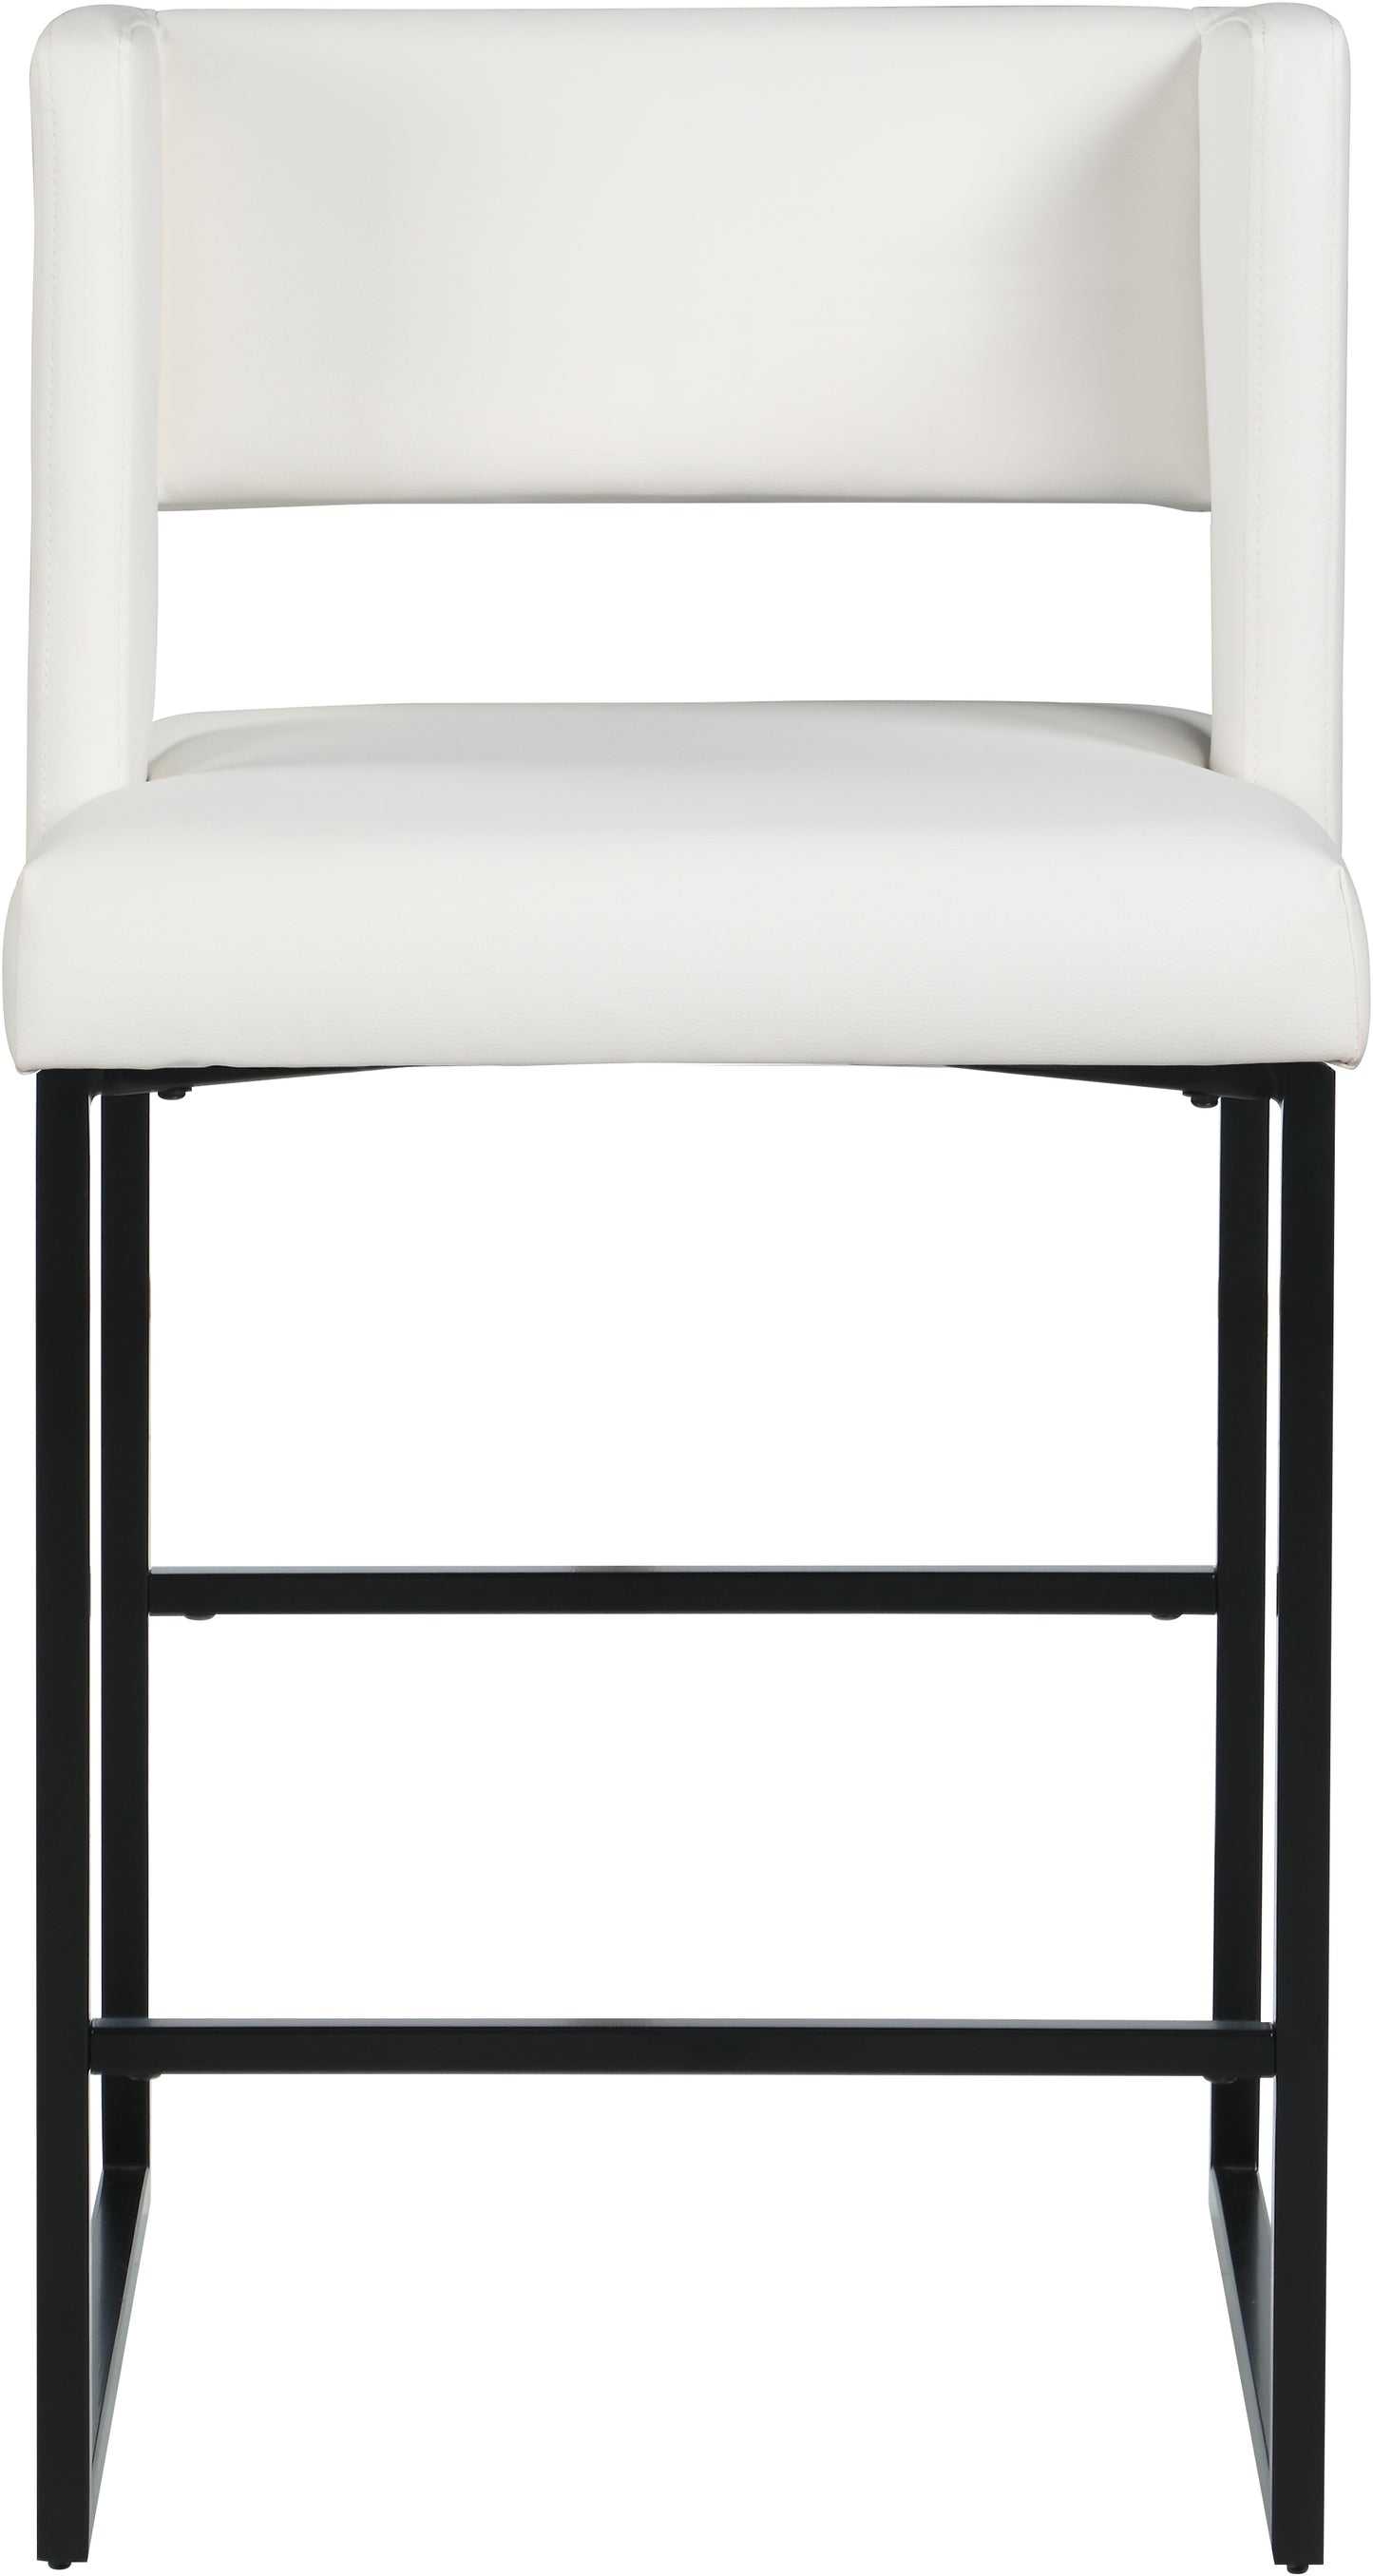 carlton white faux leather counter stool c